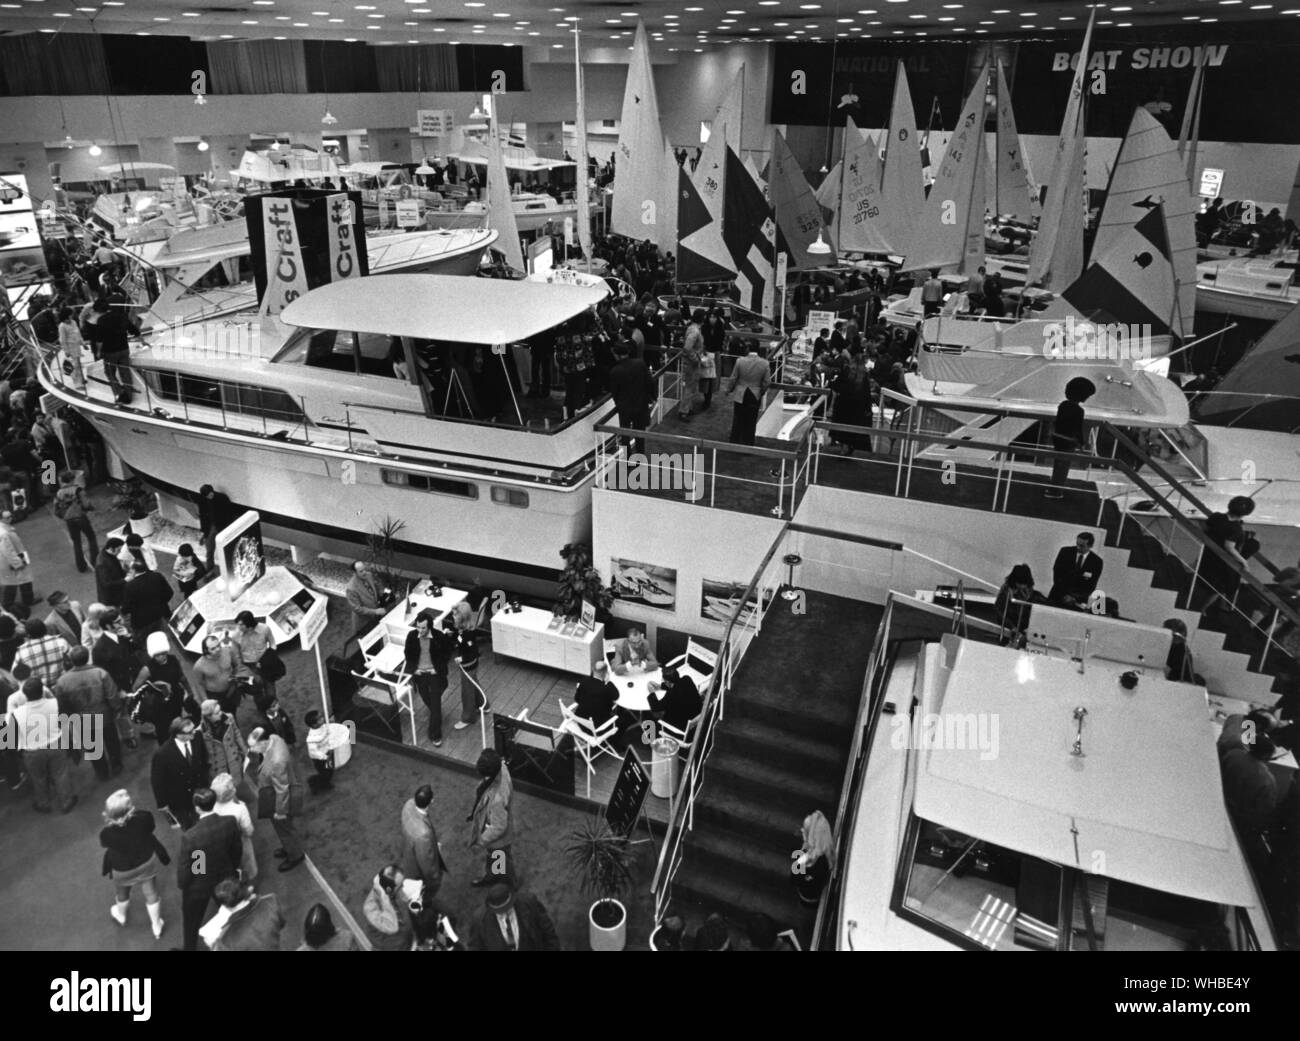 New York Boat Show National Janvier 1972. Banque D'Images